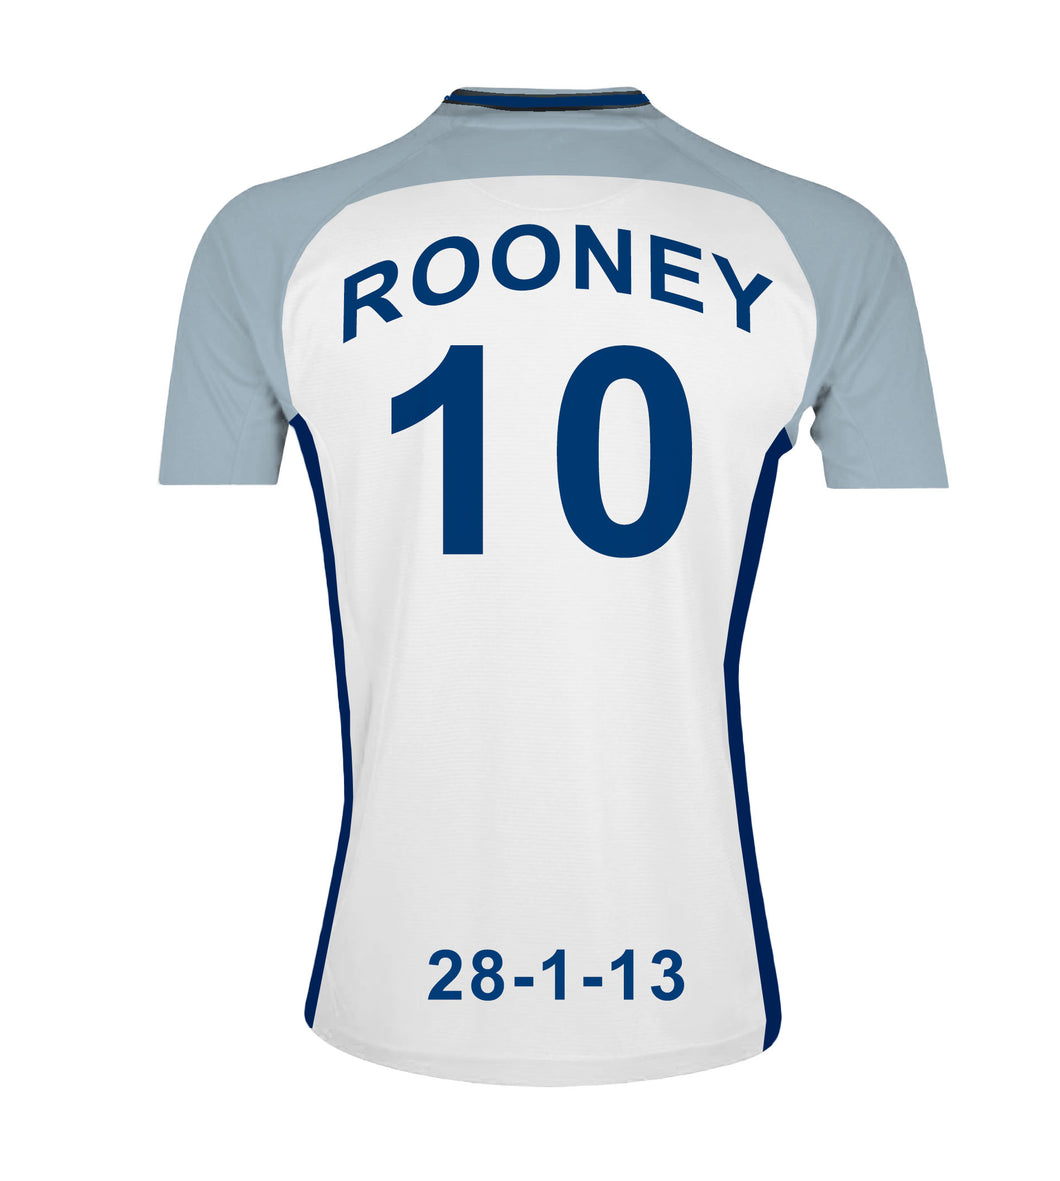 England Team Personalised Football Shirt Canvas